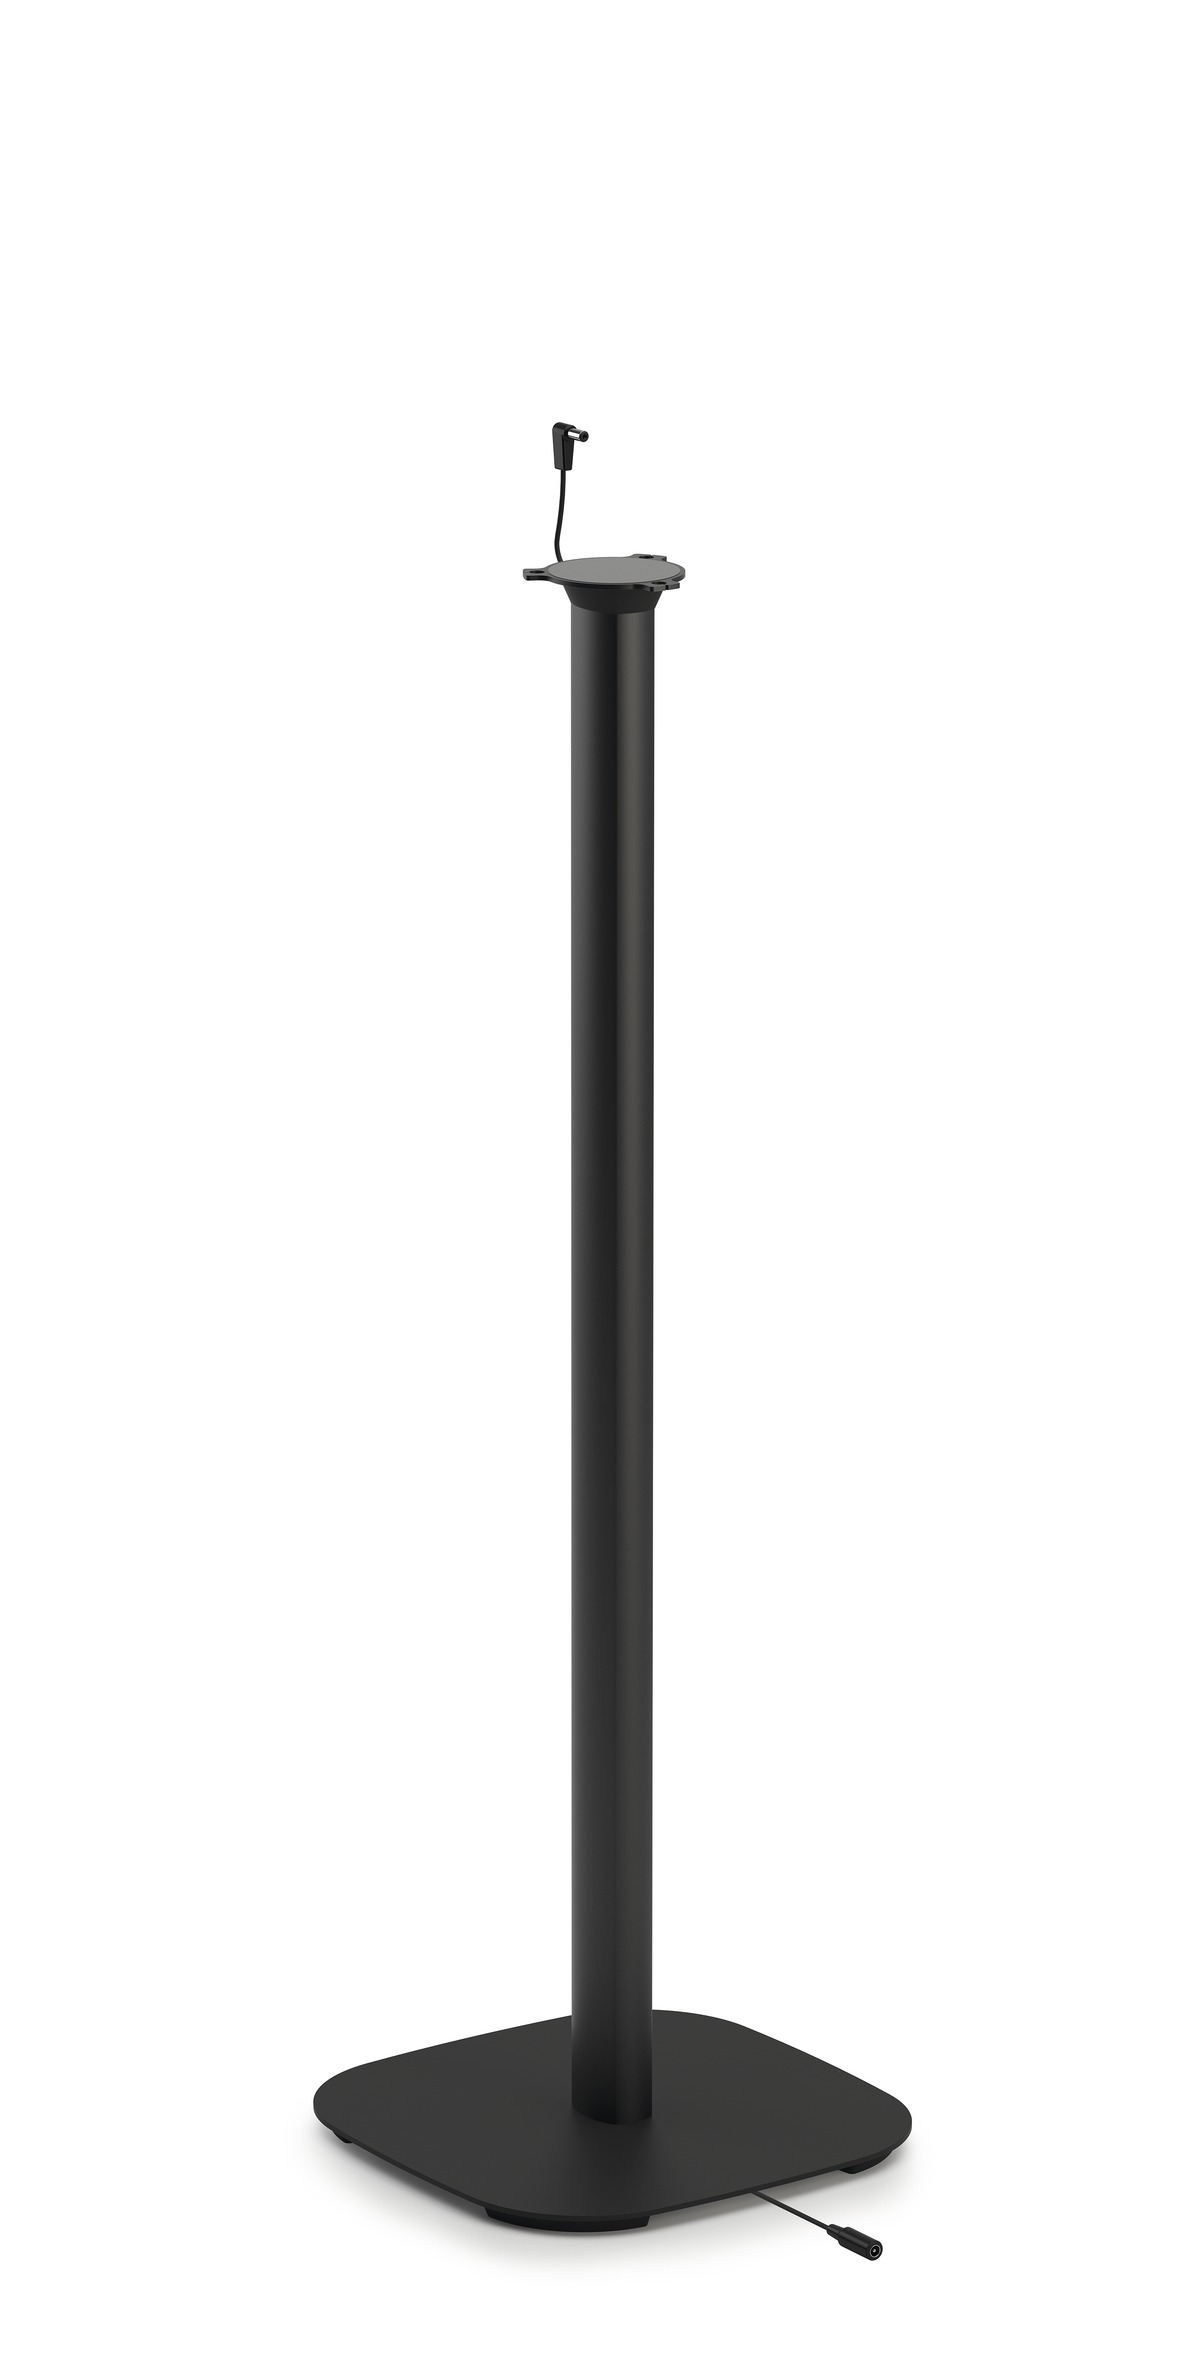 Vogel's SOUND 5313 - Floor stand for Denon HEOS 1 / HEOS 3 speaker (black)